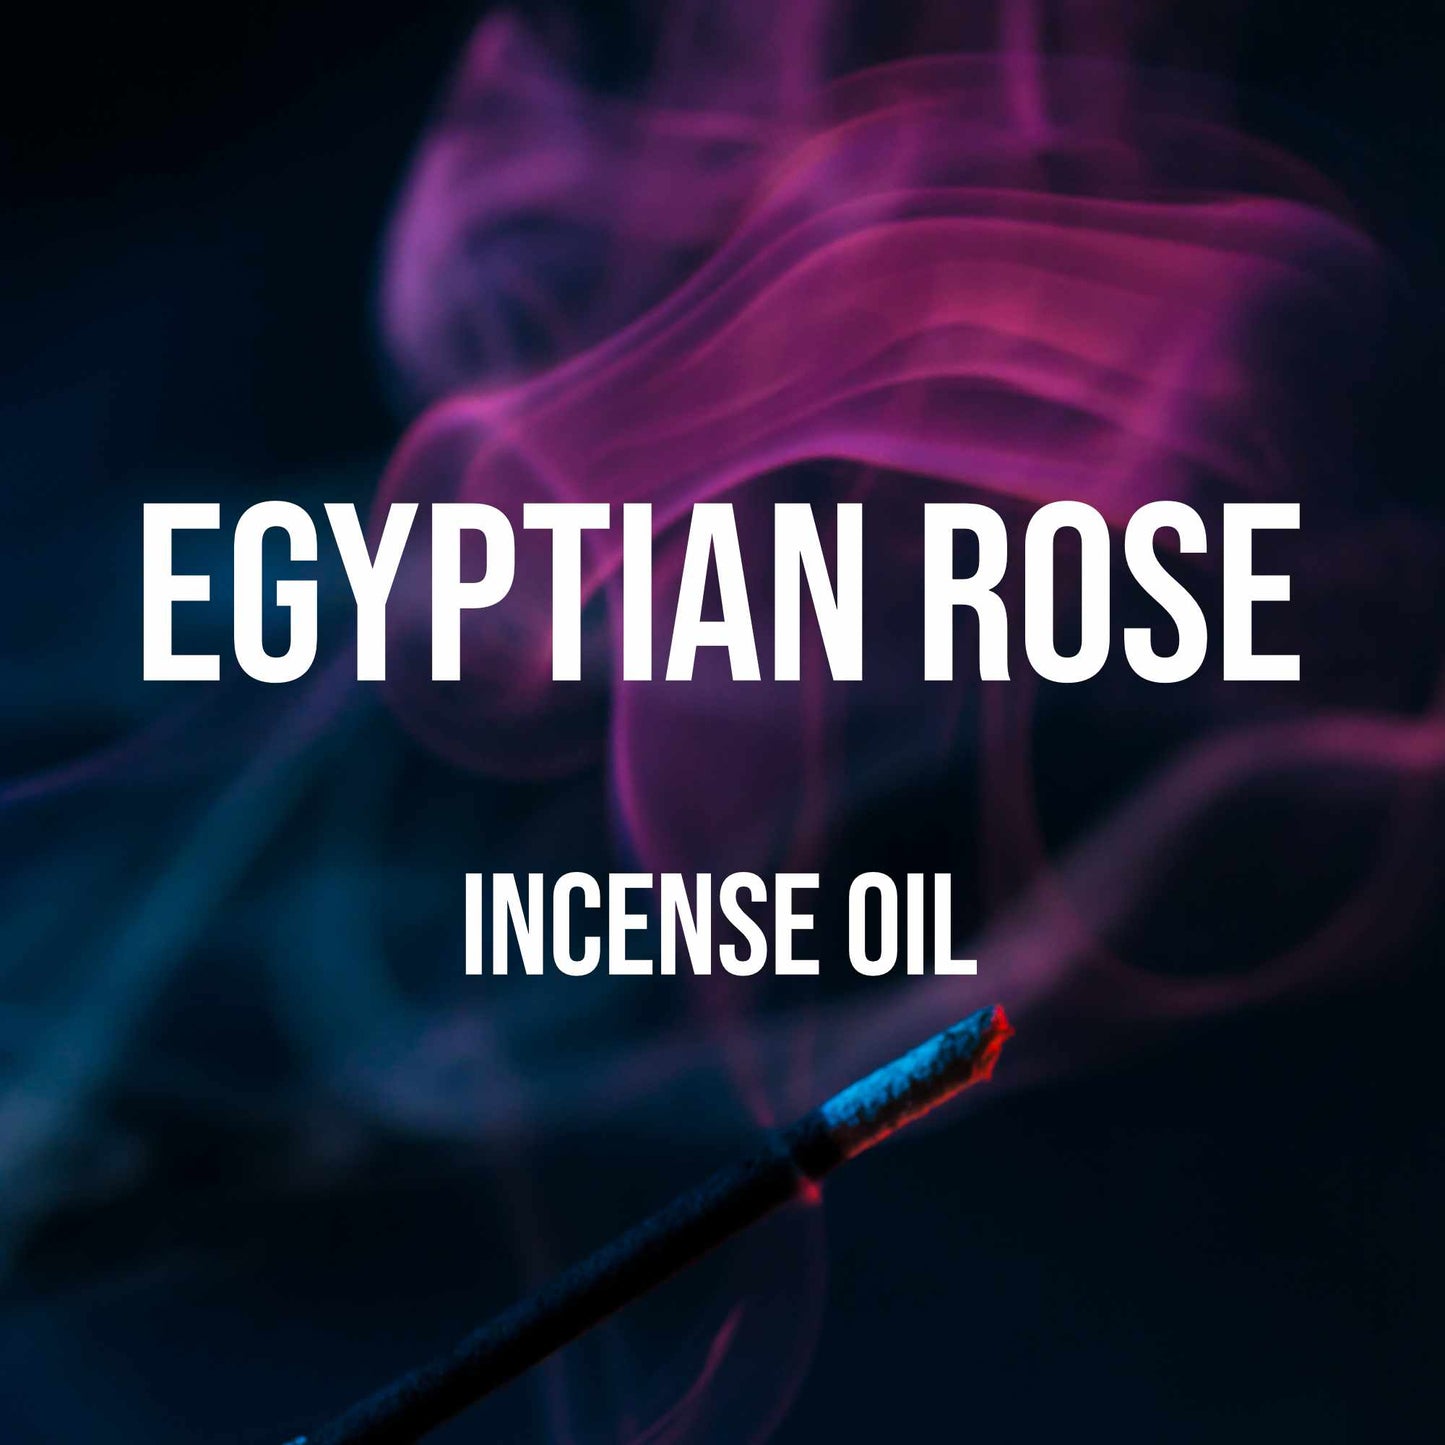 Egyptian Rose Incense Oil